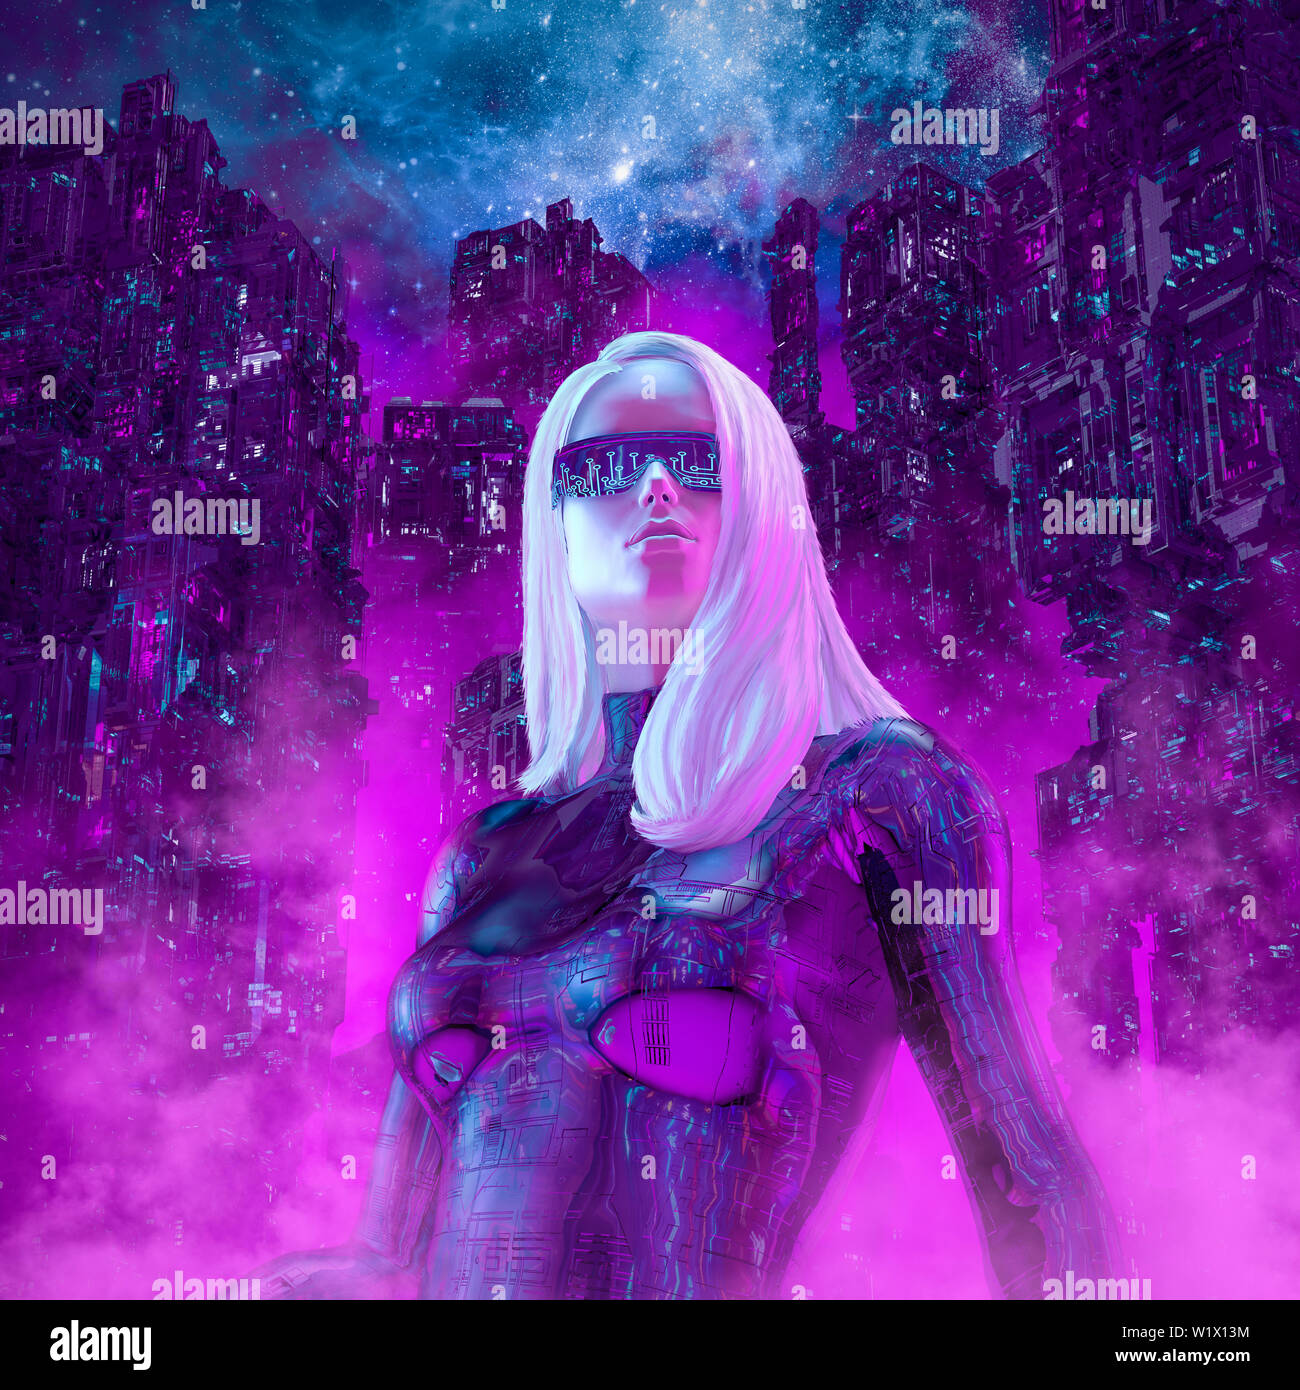 Neon night heroine / 3D illustration of beautiful blond woman with sunglasses in futuristic neon lit cyberpunk city Stock Photo